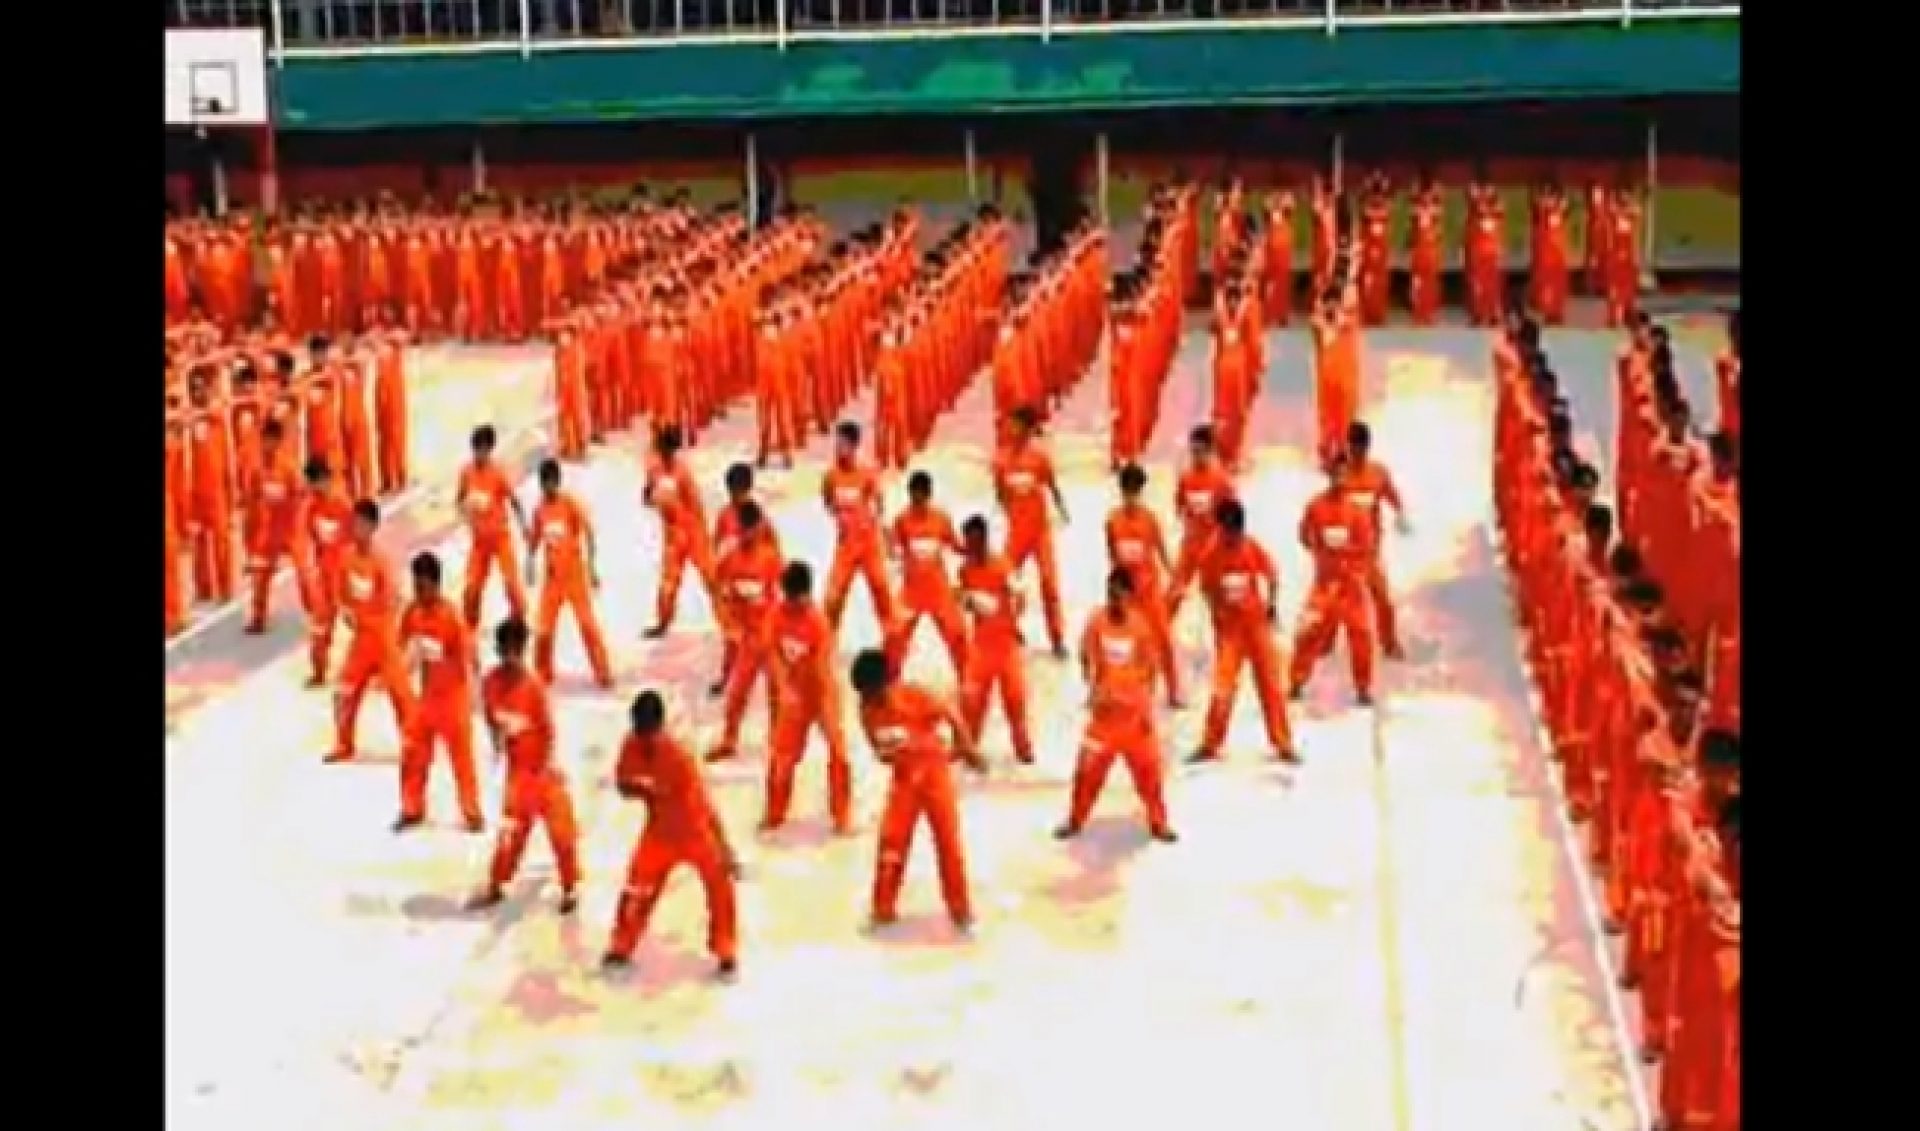 Filipino Prisoners Dance Their Way To The Big Screen